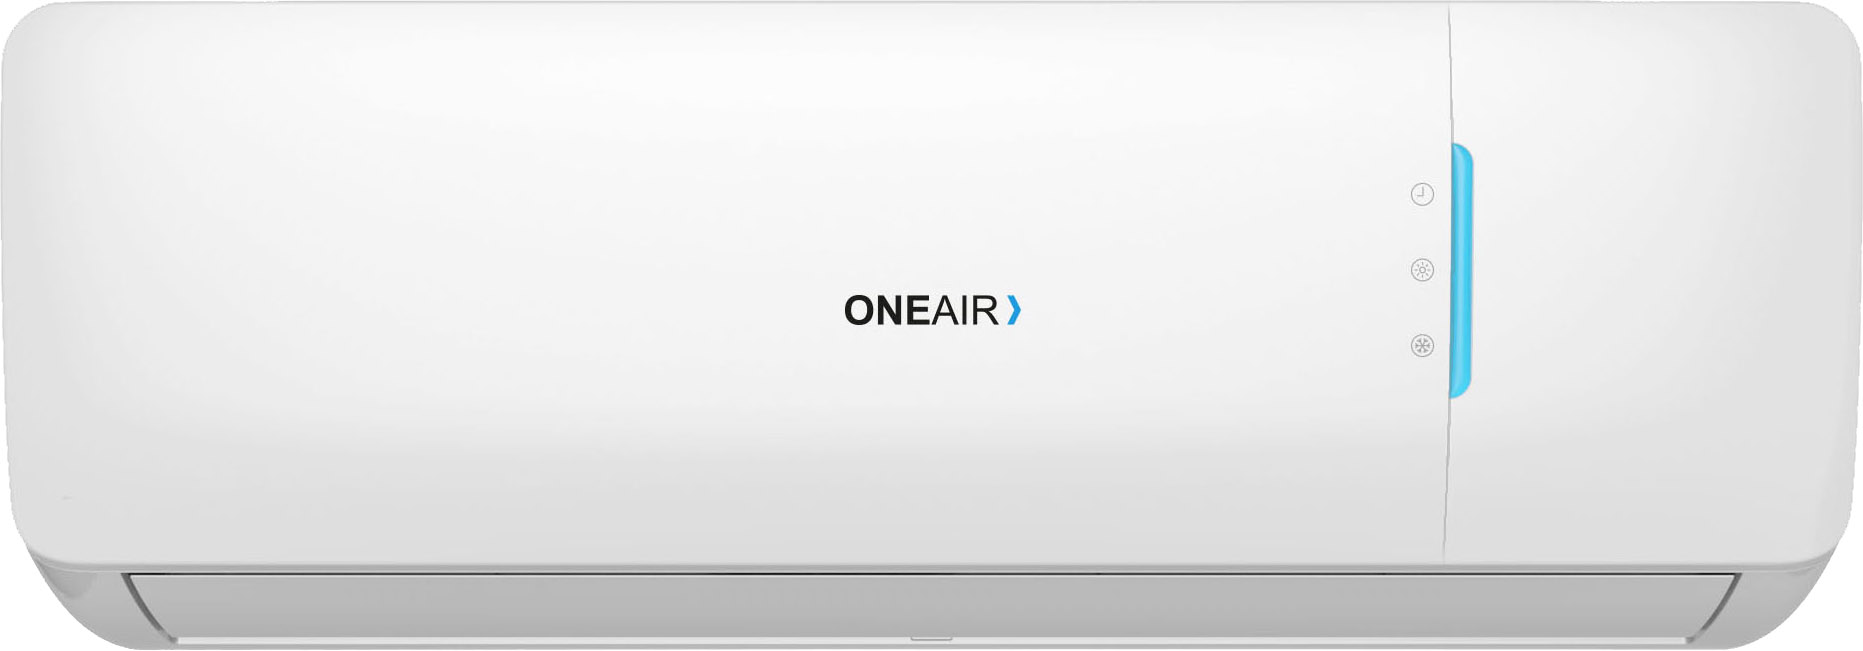 Кондиционер сплит-система OneAir OAC-12H/N1 цена 0.00 грн - фотография 2